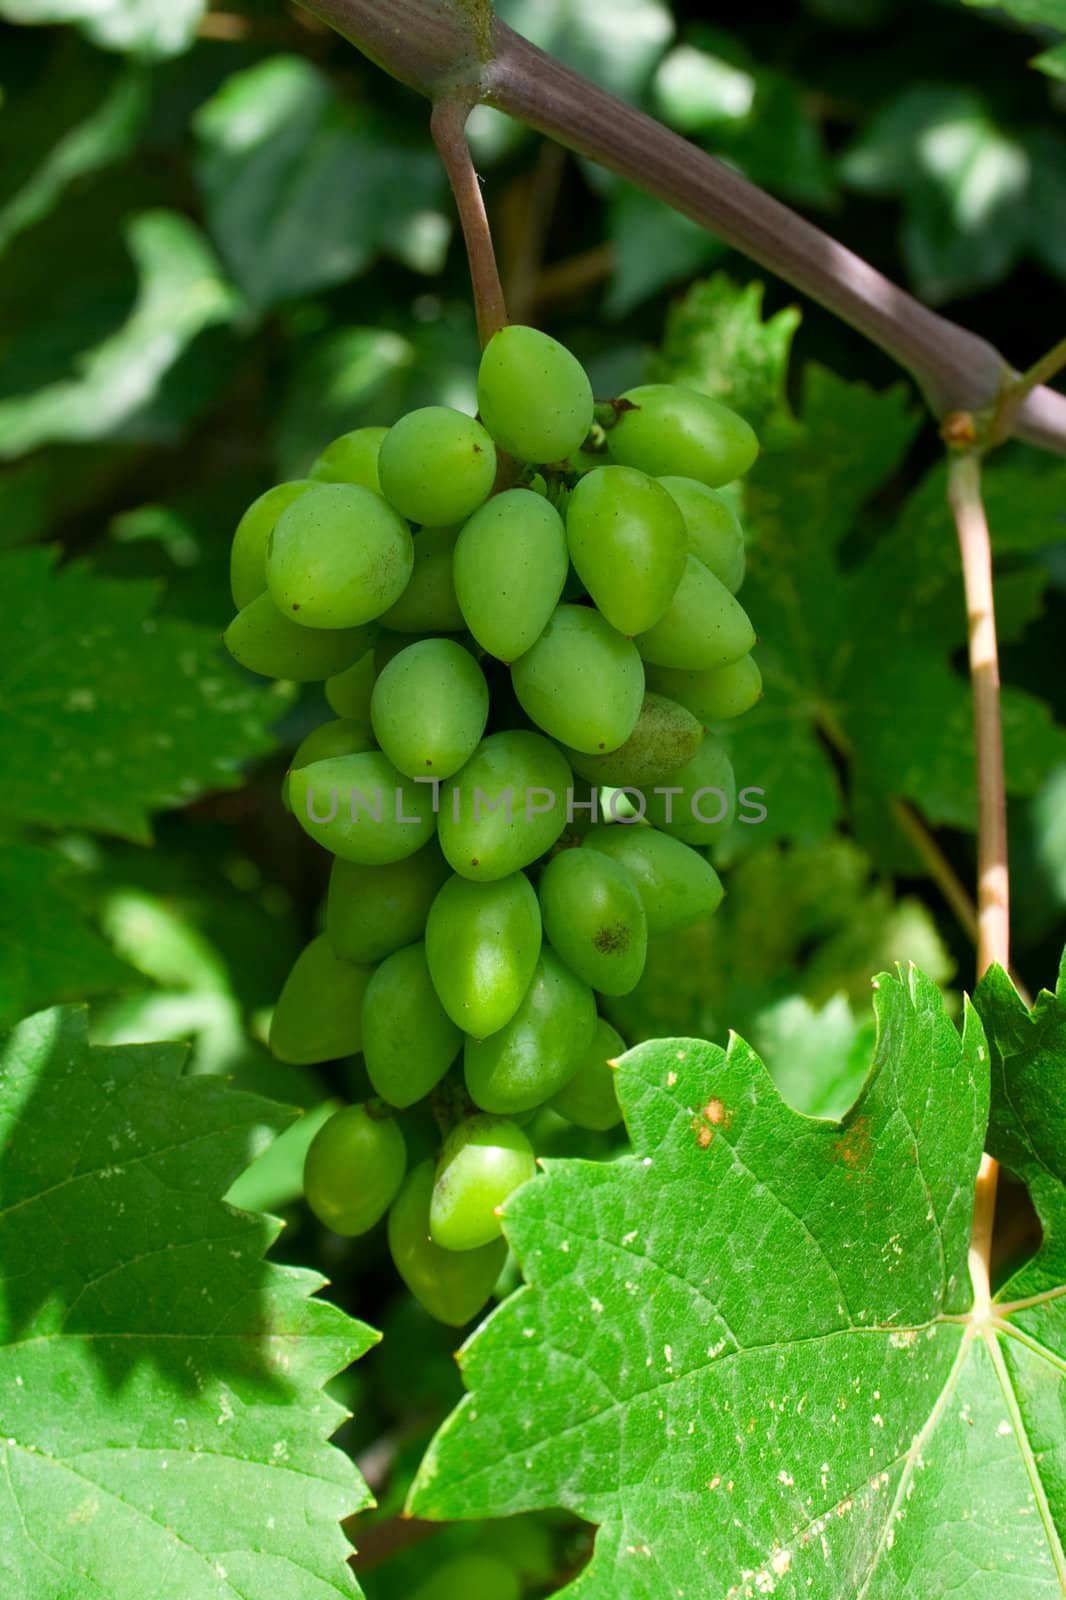 Cluster of green grapes by Kriblikrabli